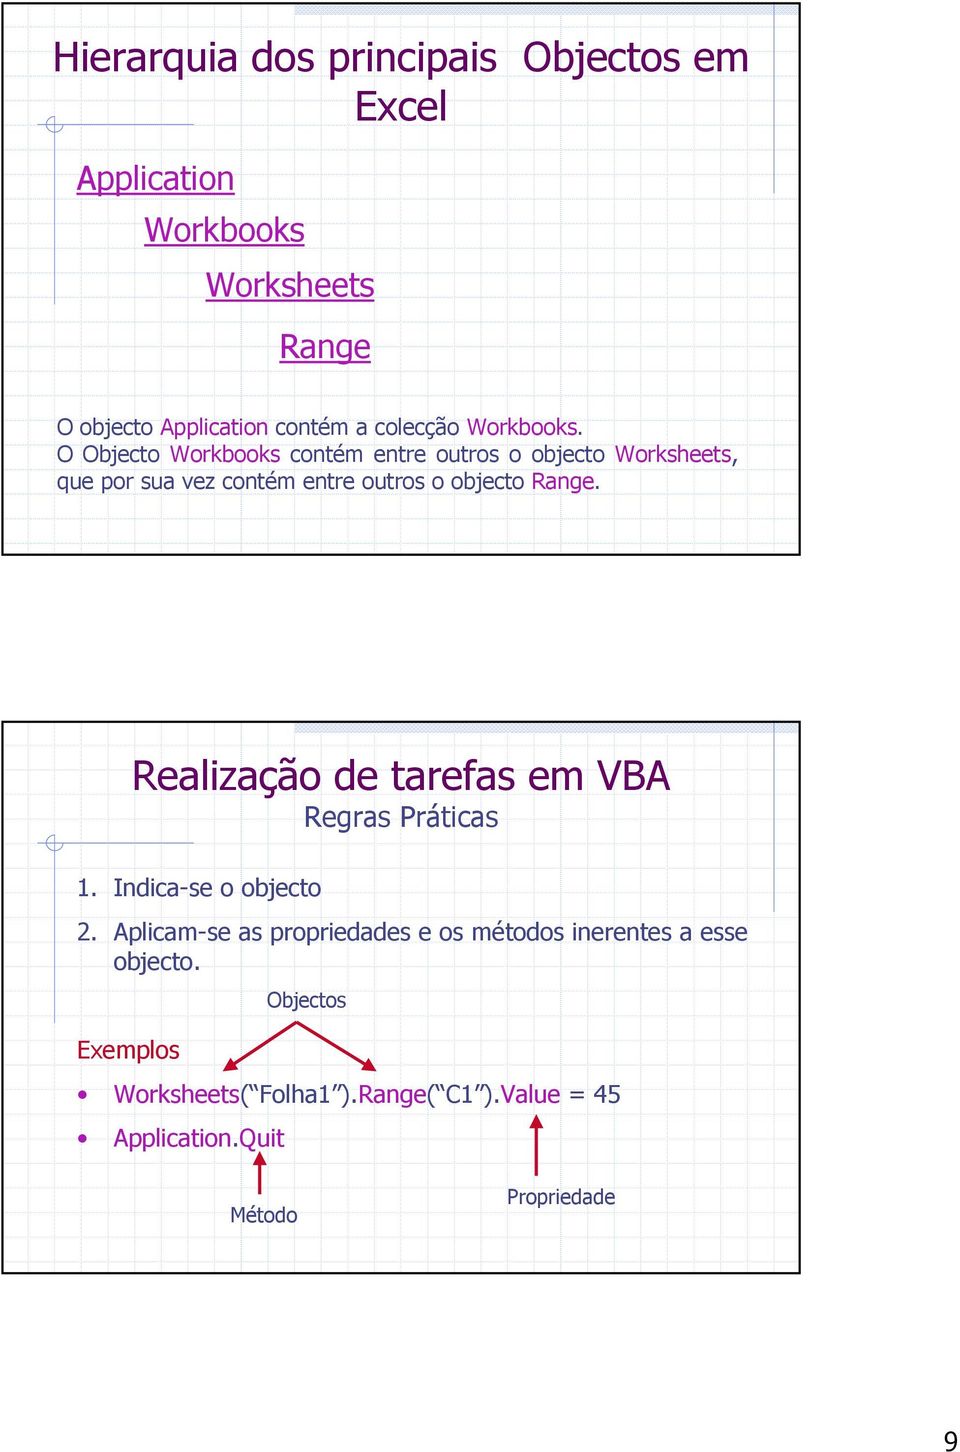 O Objecto Workbooks contém entre outros o objecto Worksheets, que por sua vez contém entre outros o objecto Range.